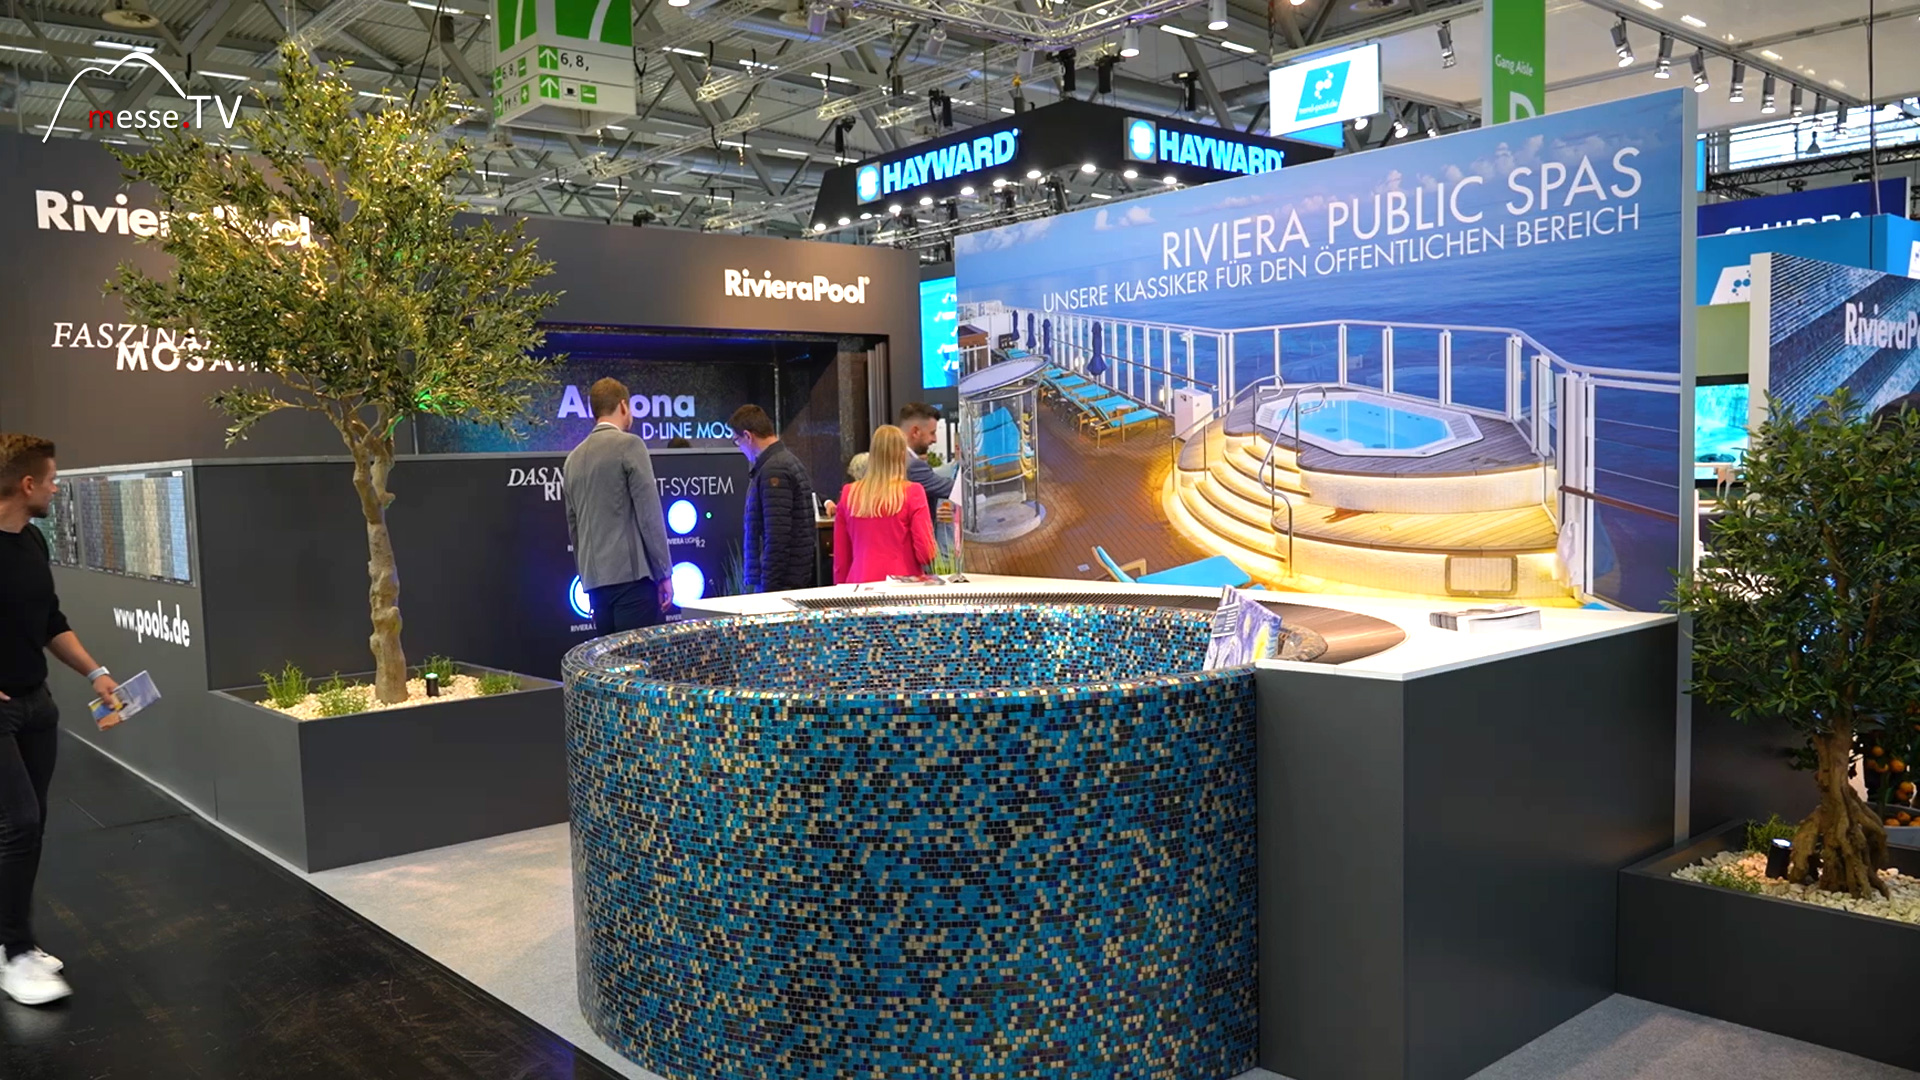 Fertigbecken mit Mosaikfliesen Riviera Pool Messe aquanale 2023